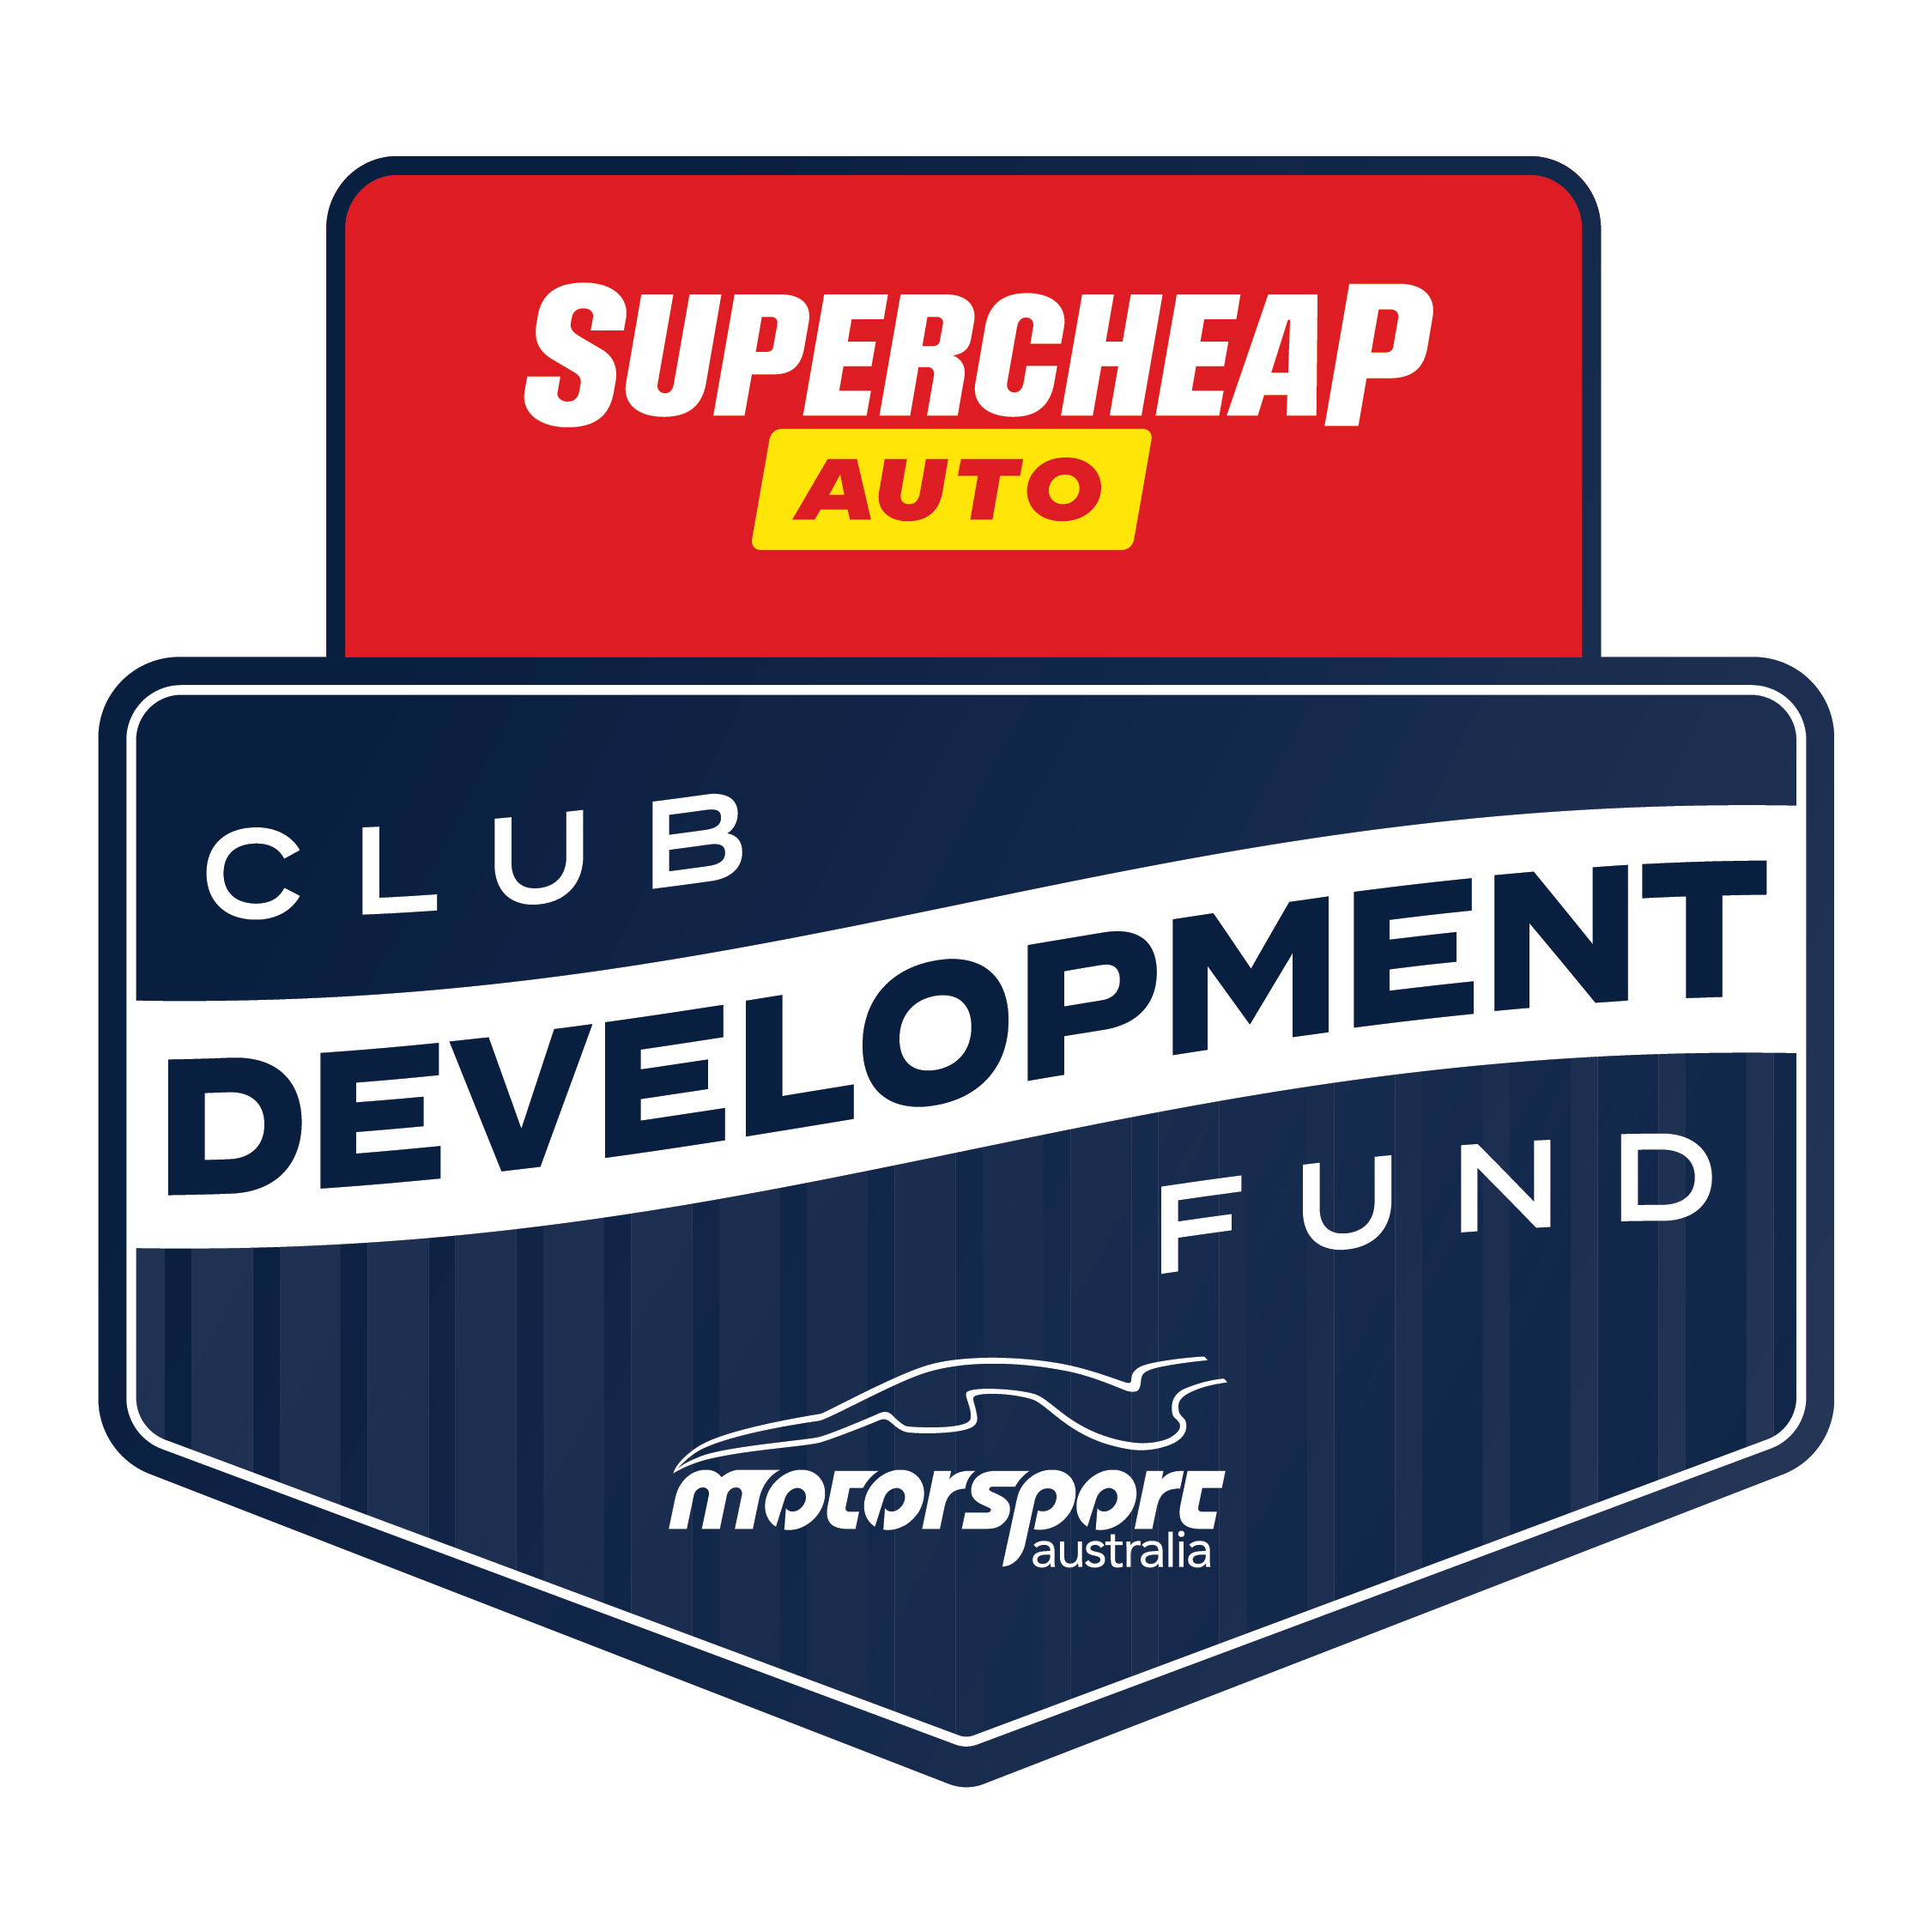 Supercheap Auto Club Development Fund Sponsorship Page